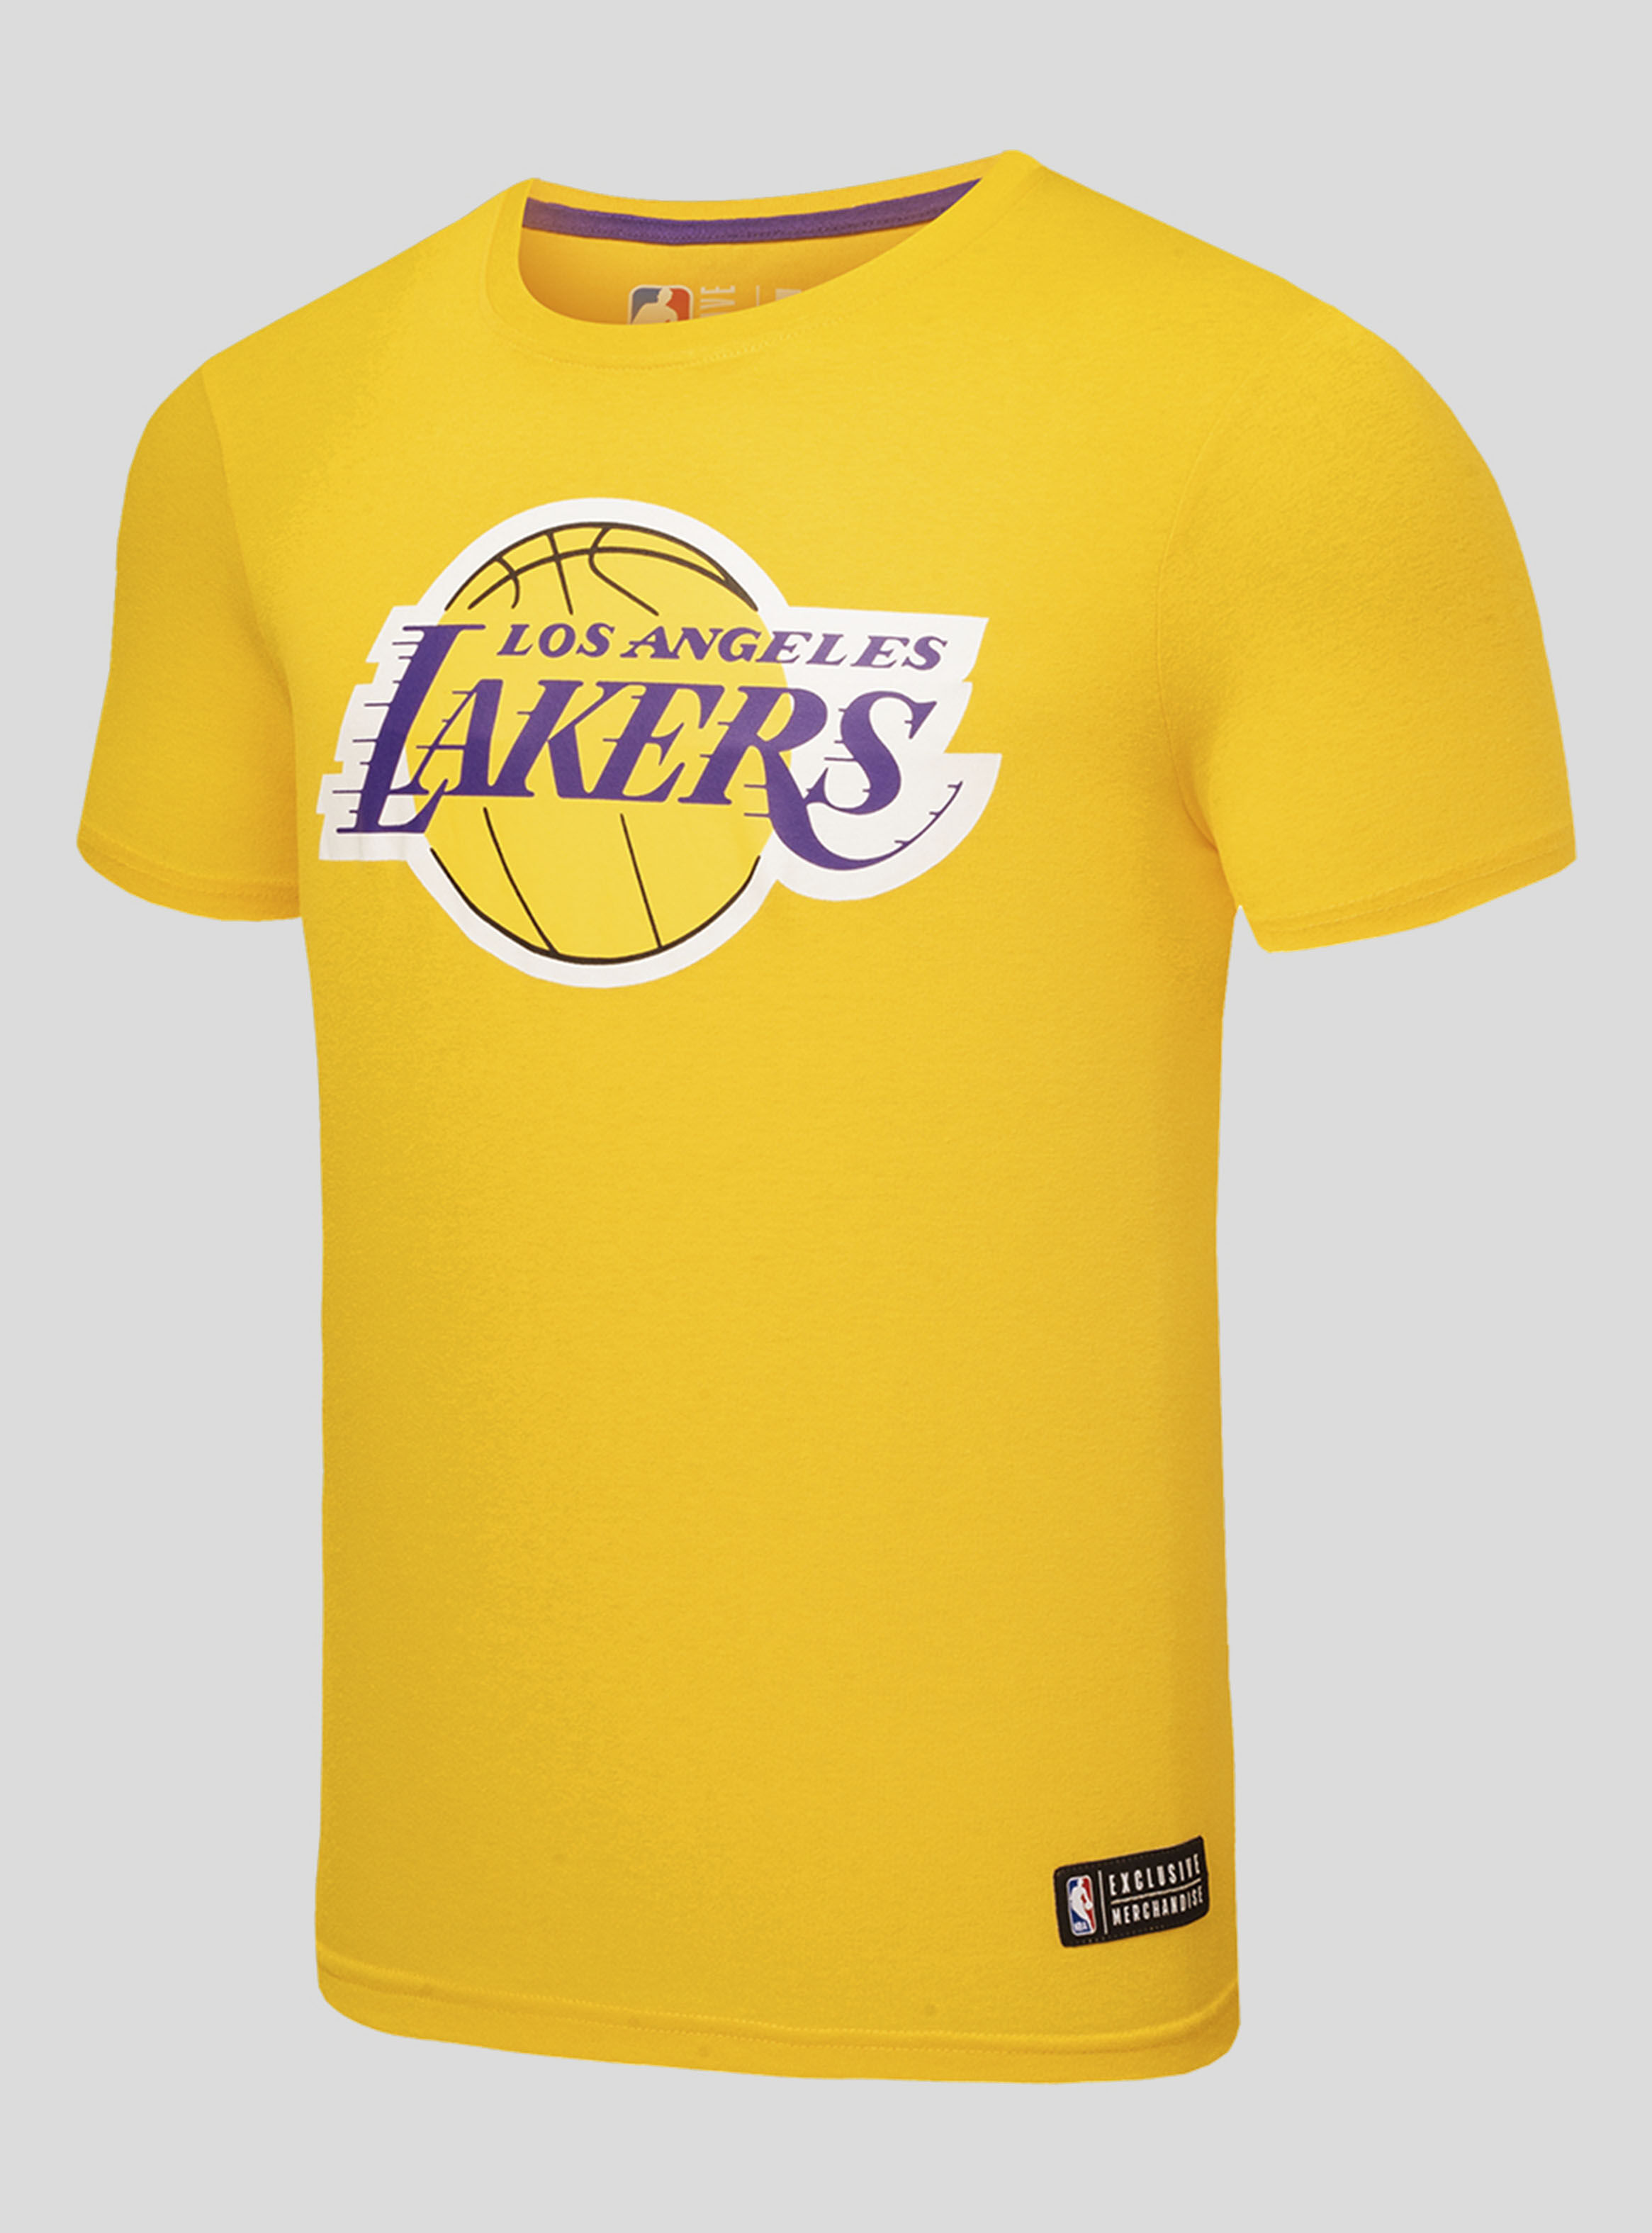 Camiseta Los Angeles Lakers manga corta amarilla. Worn Logo / Wordmark.  Hardwood Classics